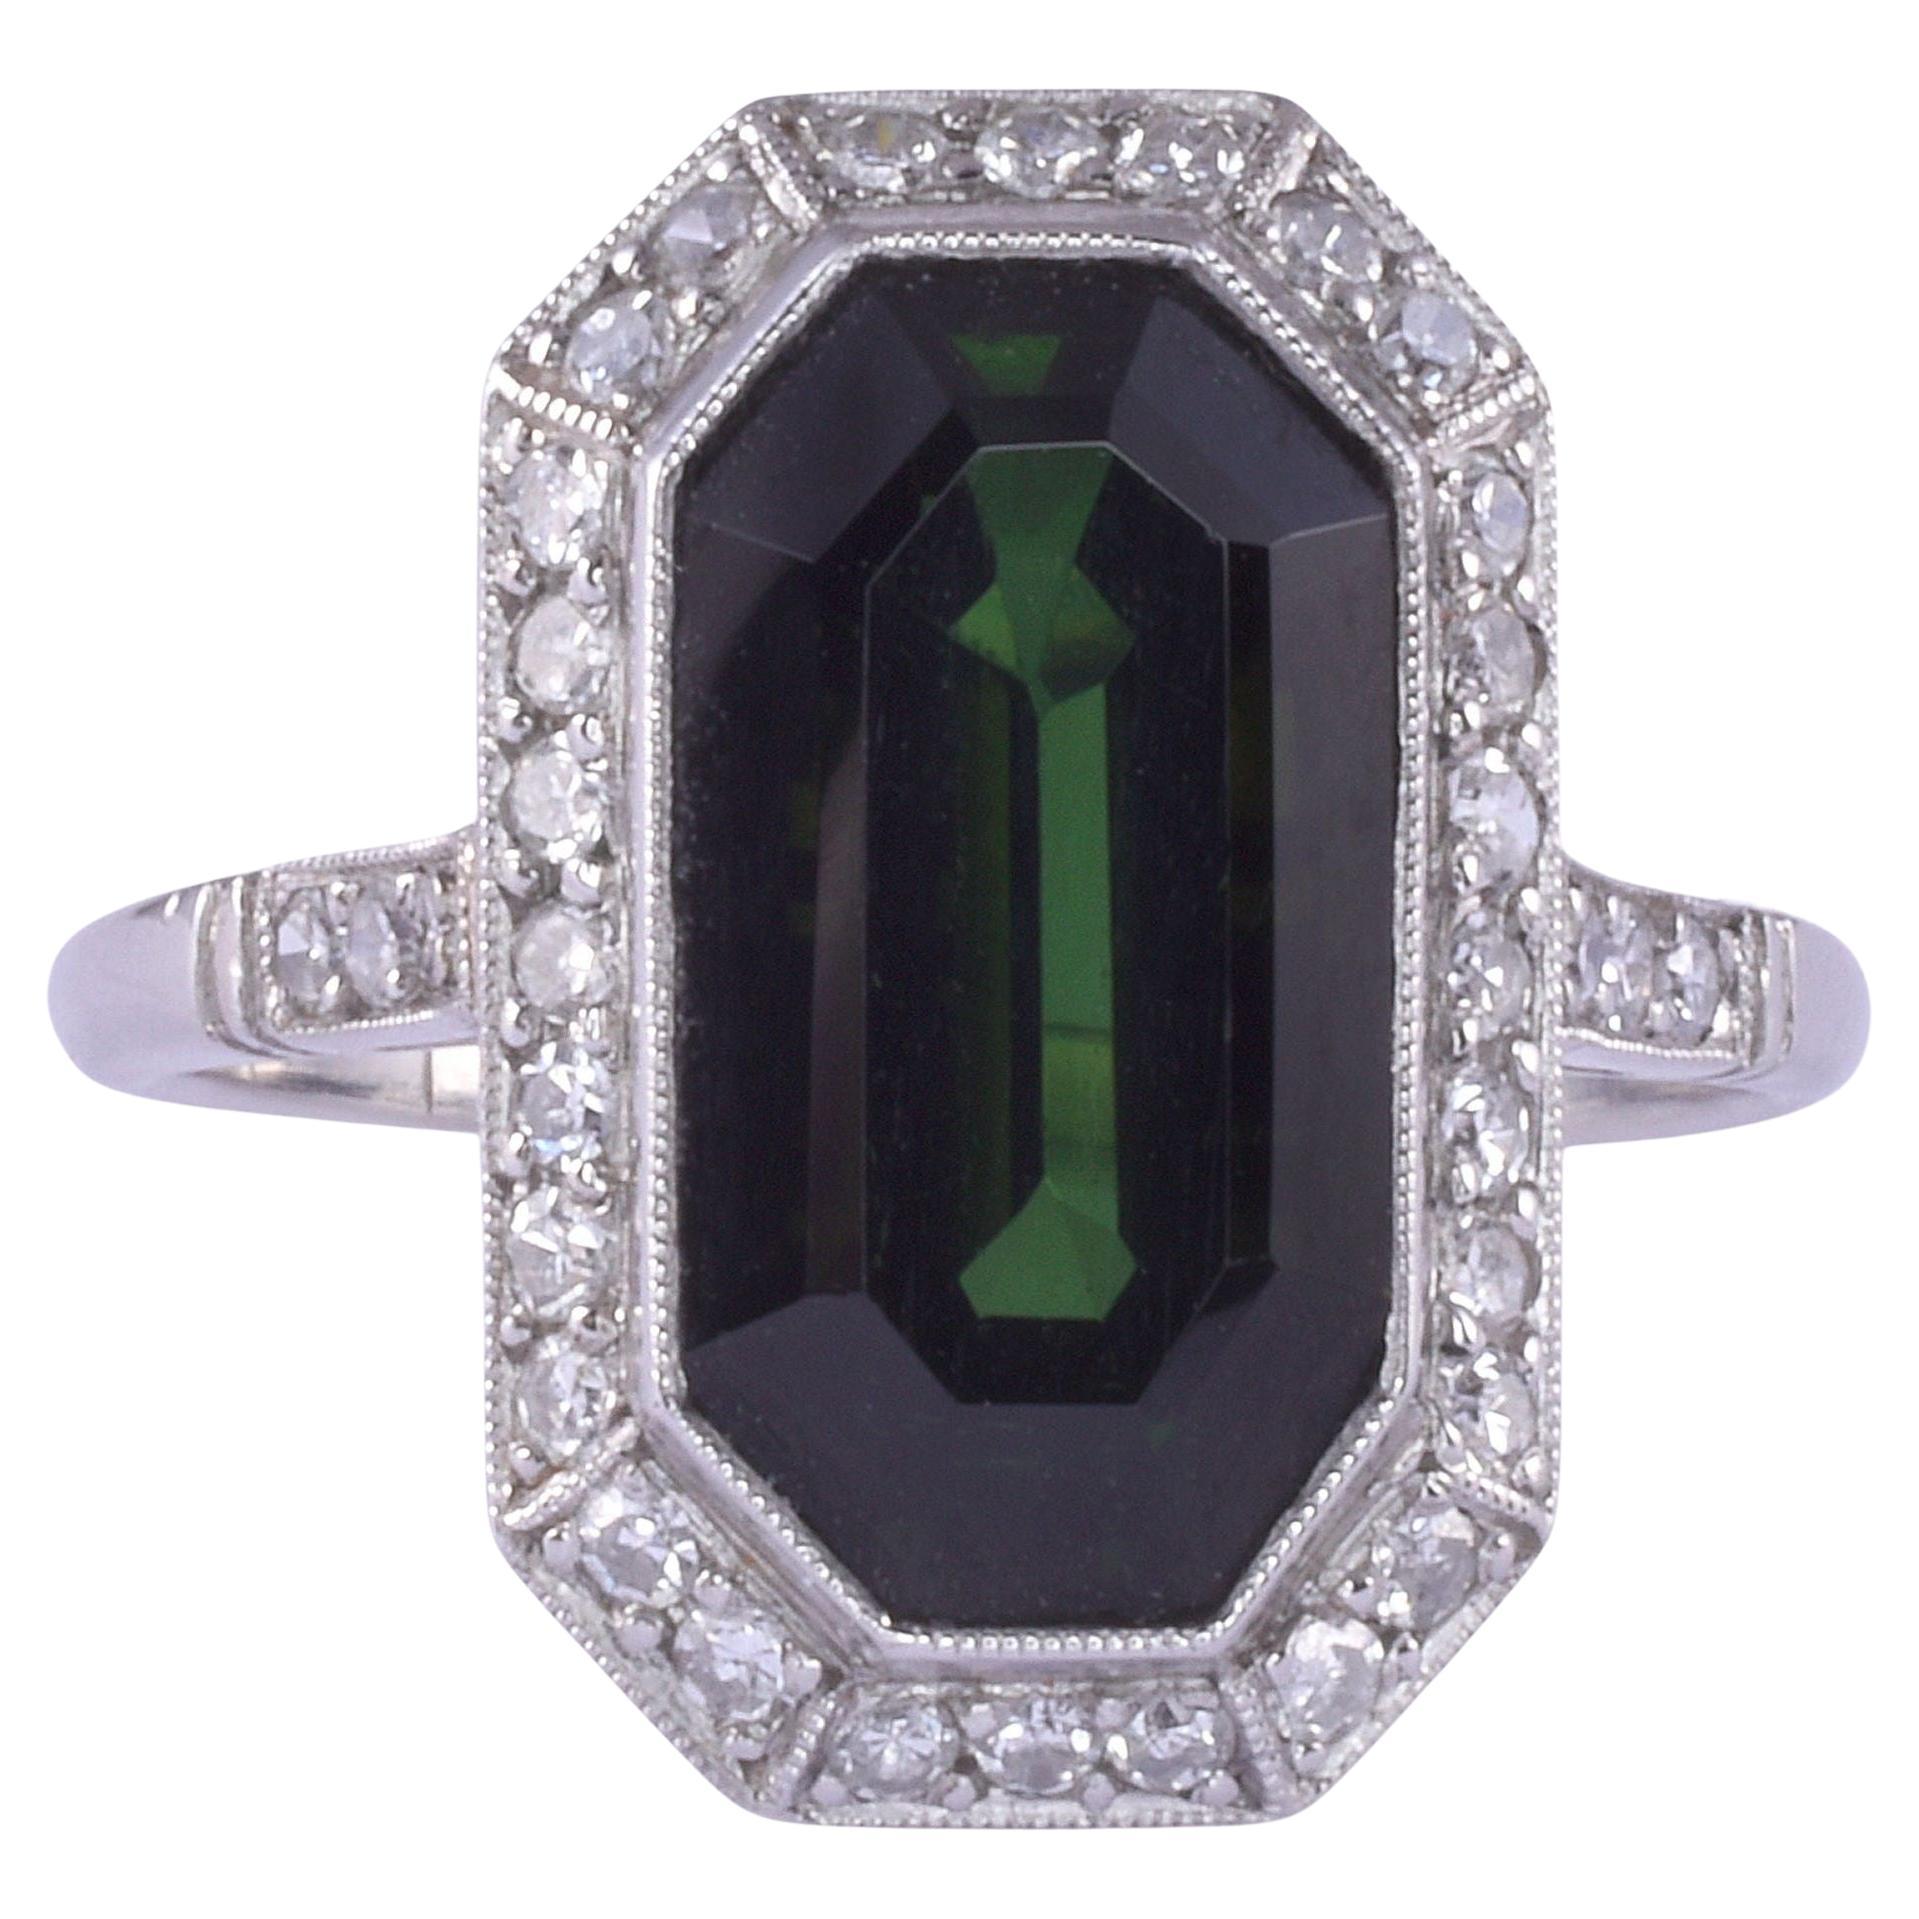 Art Deco Dark Green Tourmaline Platinum Ring